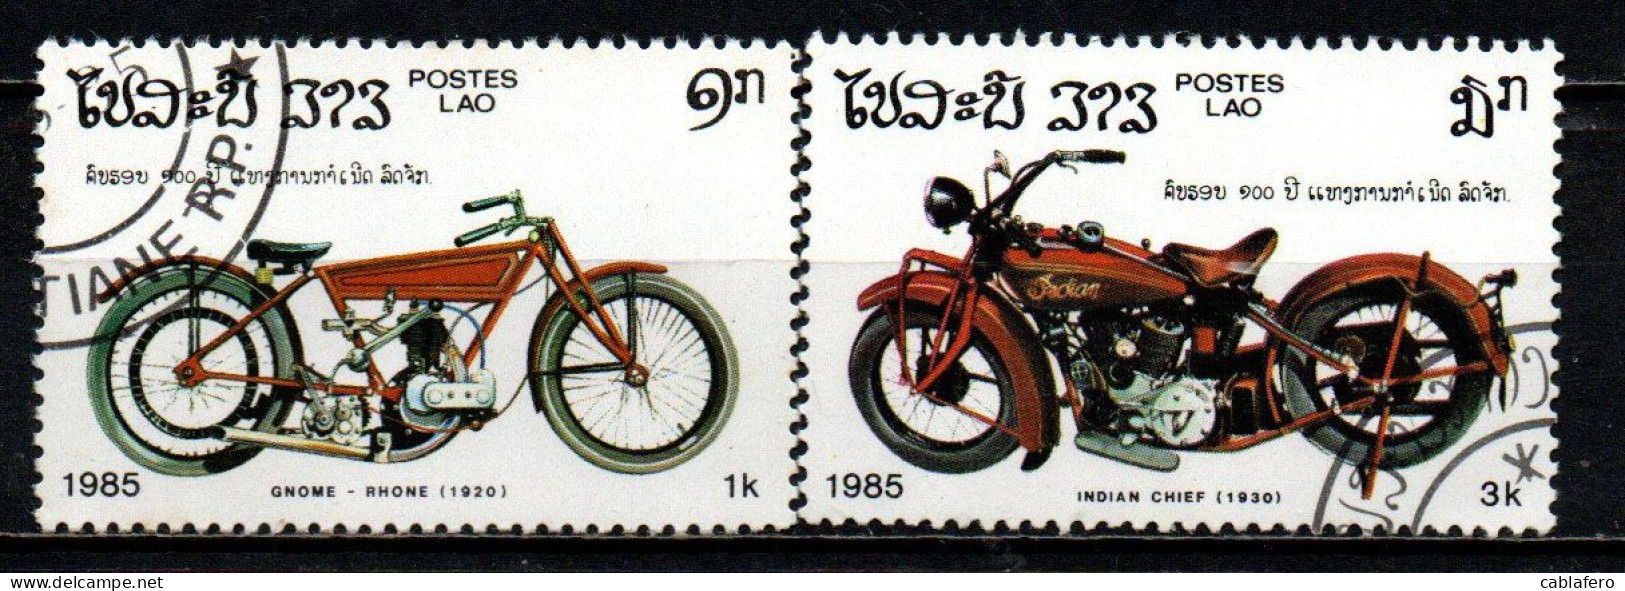 LAOS - 1985 - MOTOCICLETTE - USATI - Laos